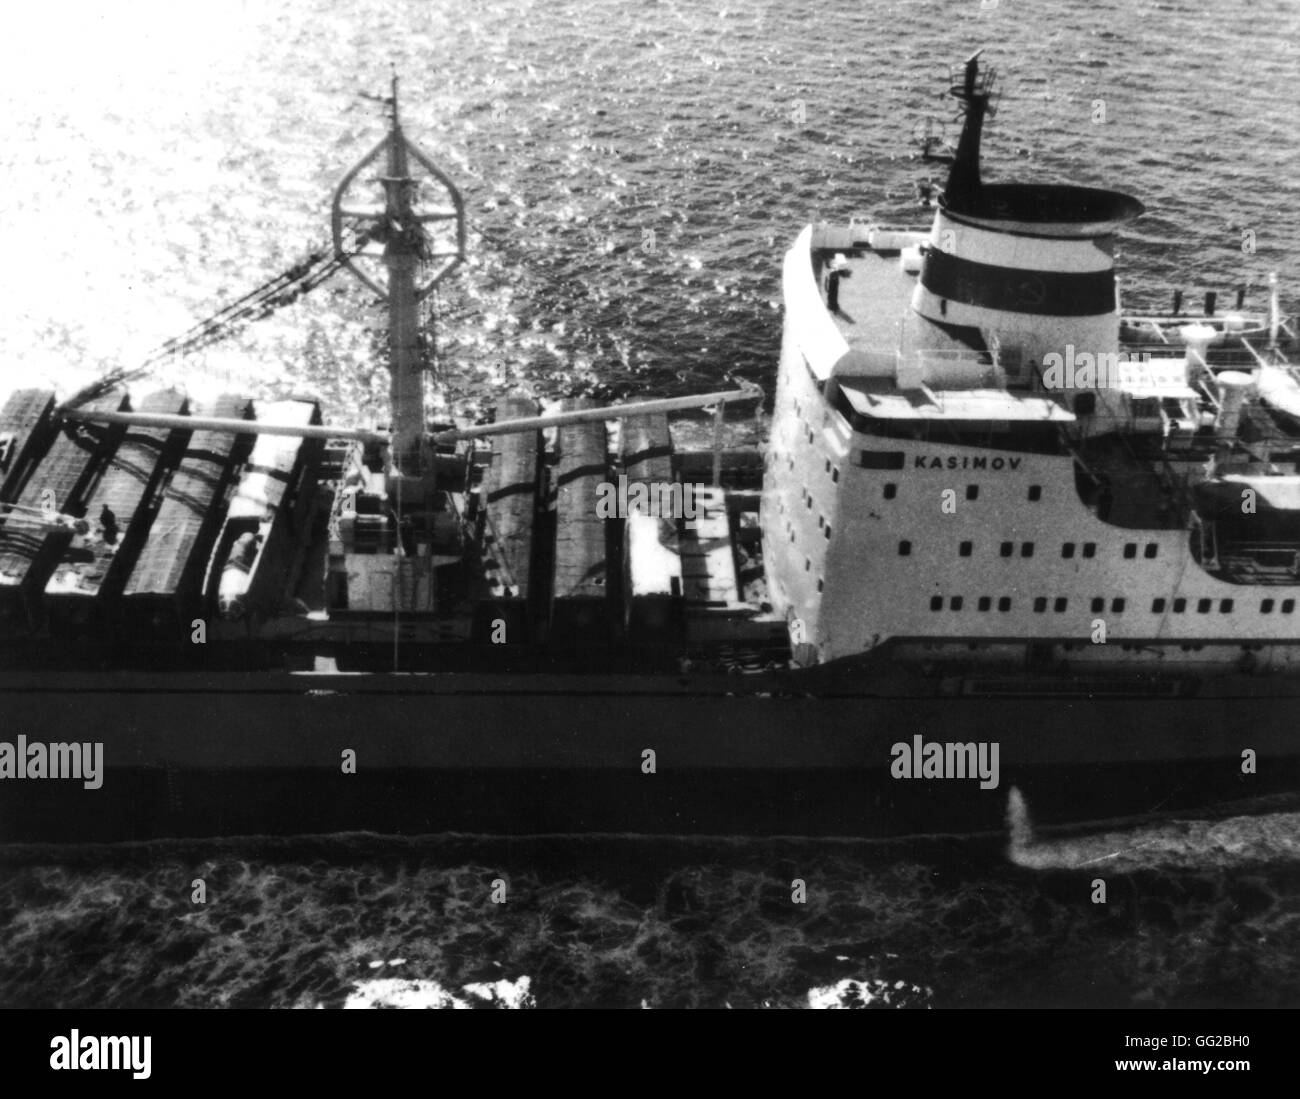 Kubanische Raketen Krise. Sowjetische Schiff "Kasimov" 1962 / 1963 Kuba Foto U.S. Air Force Stockfoto